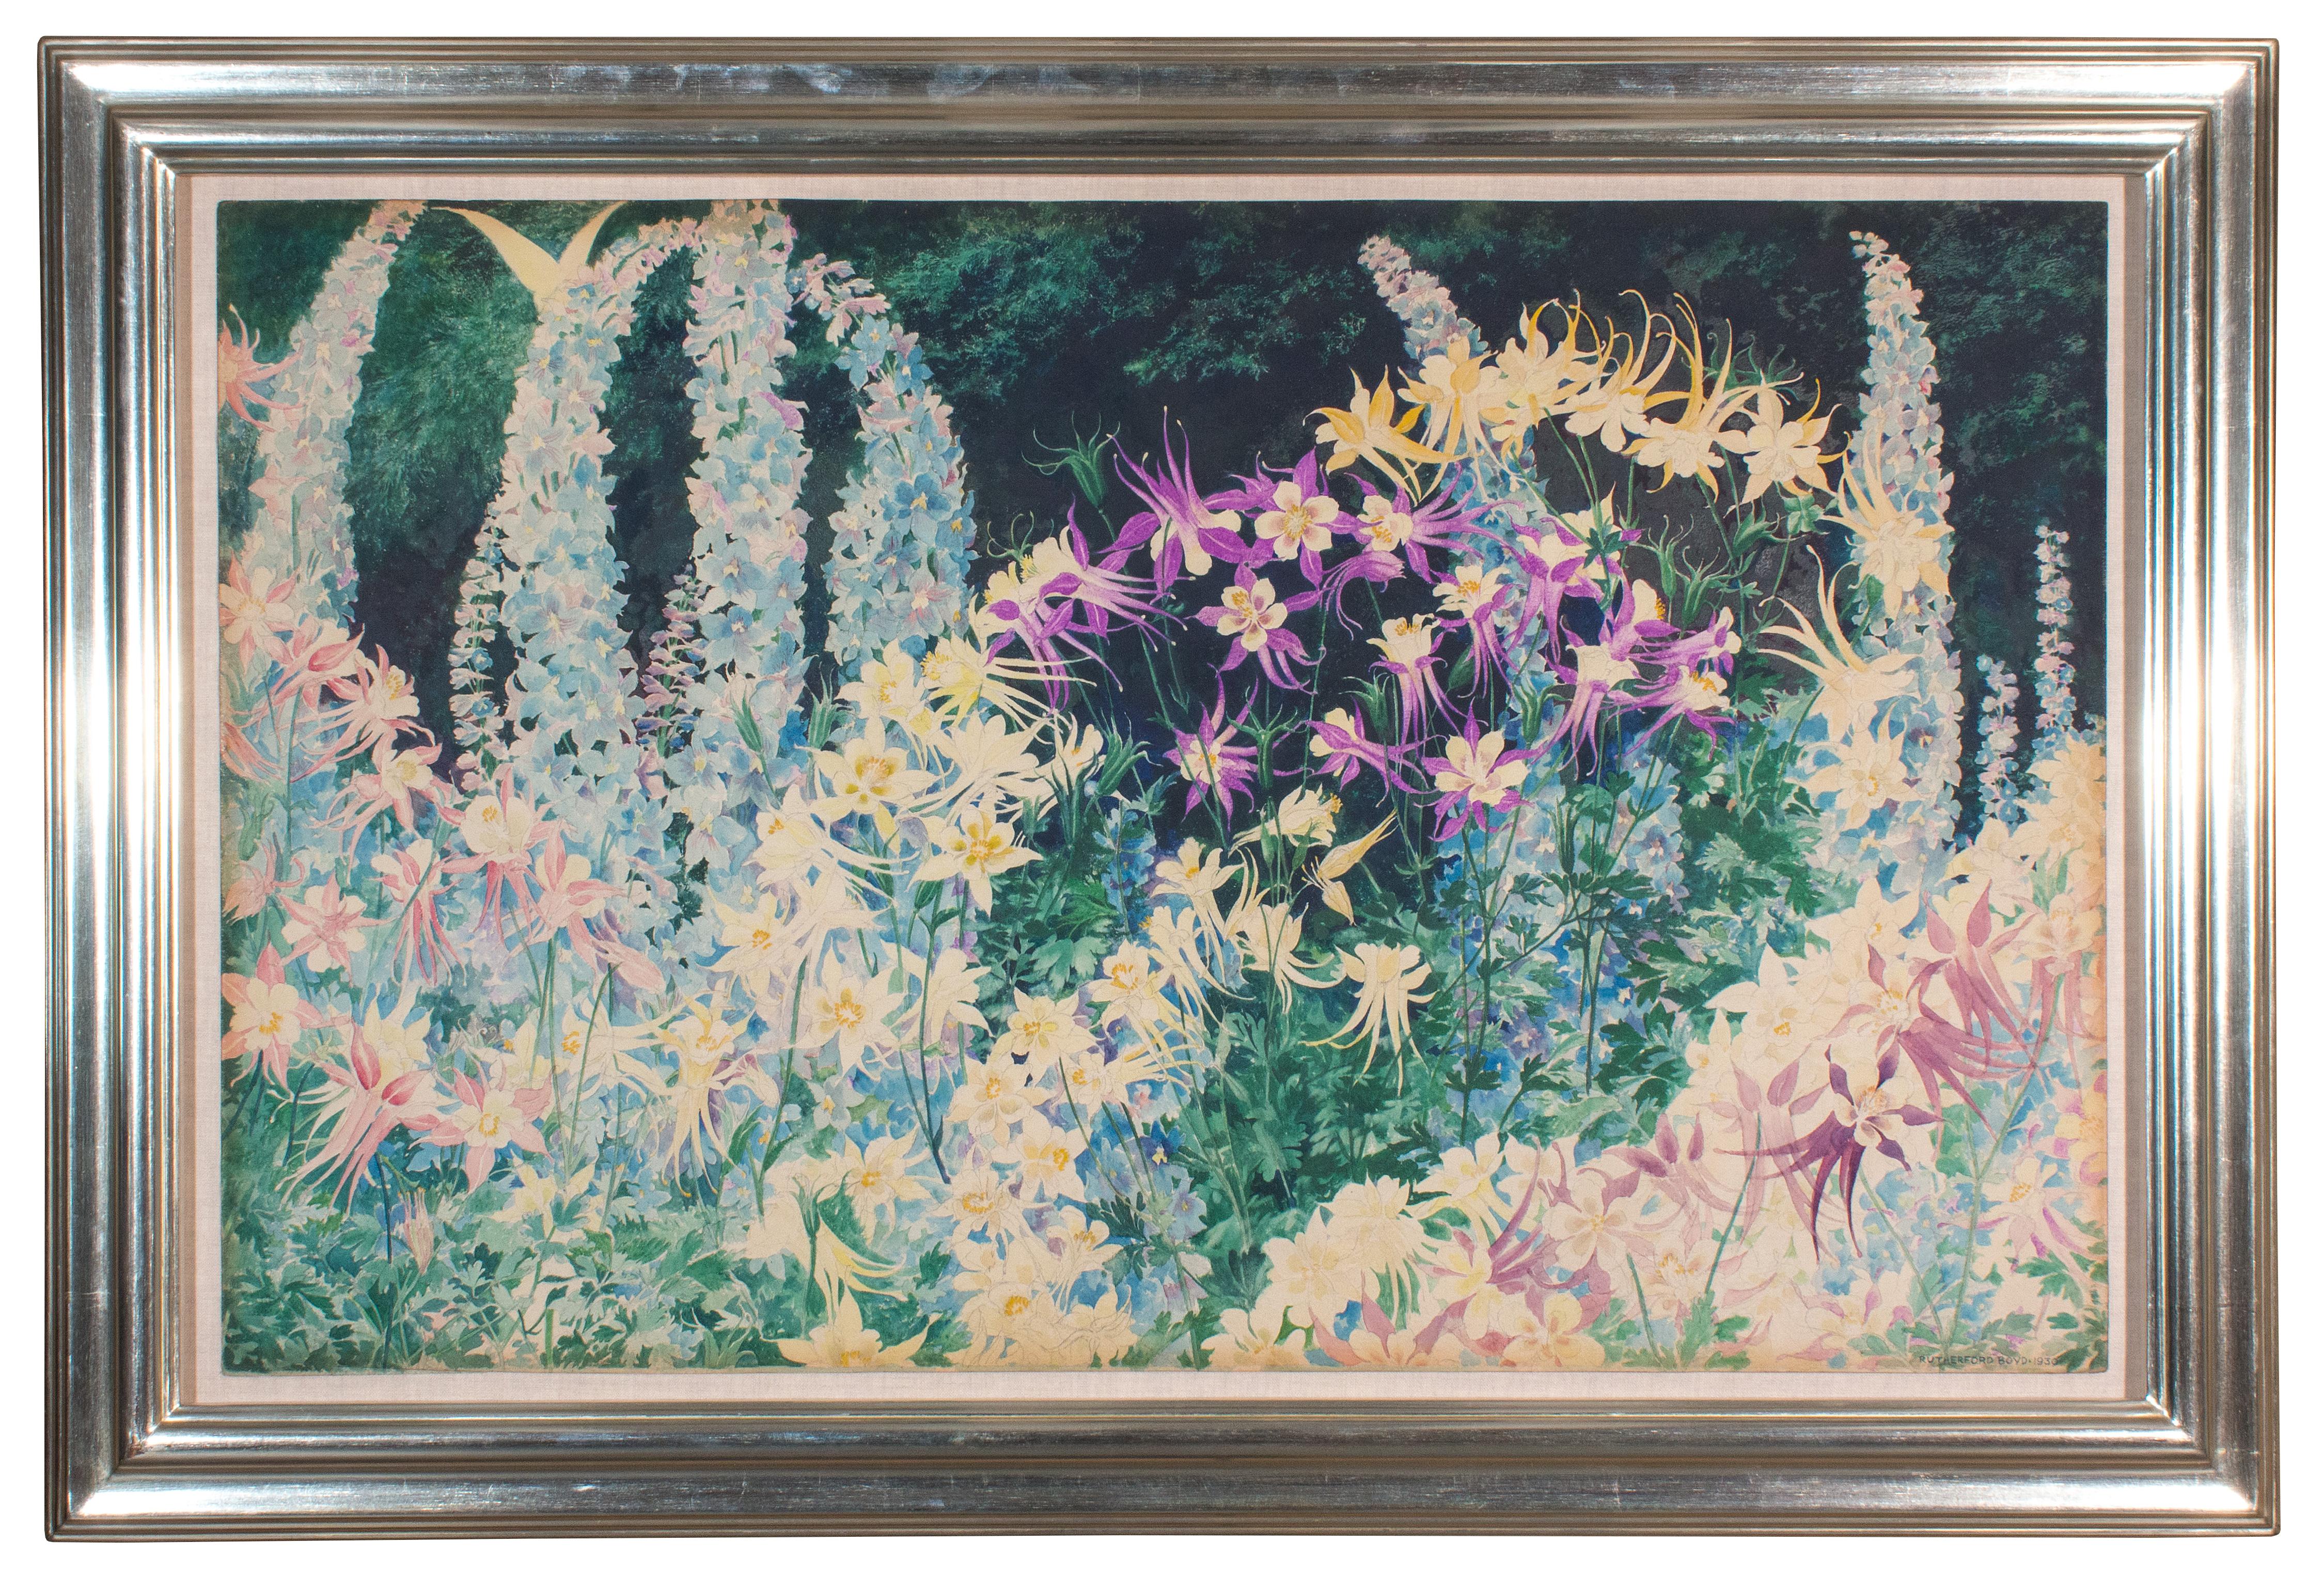 Flowers: Aquilegia and Delphinium - American impressionist watercolor on paper